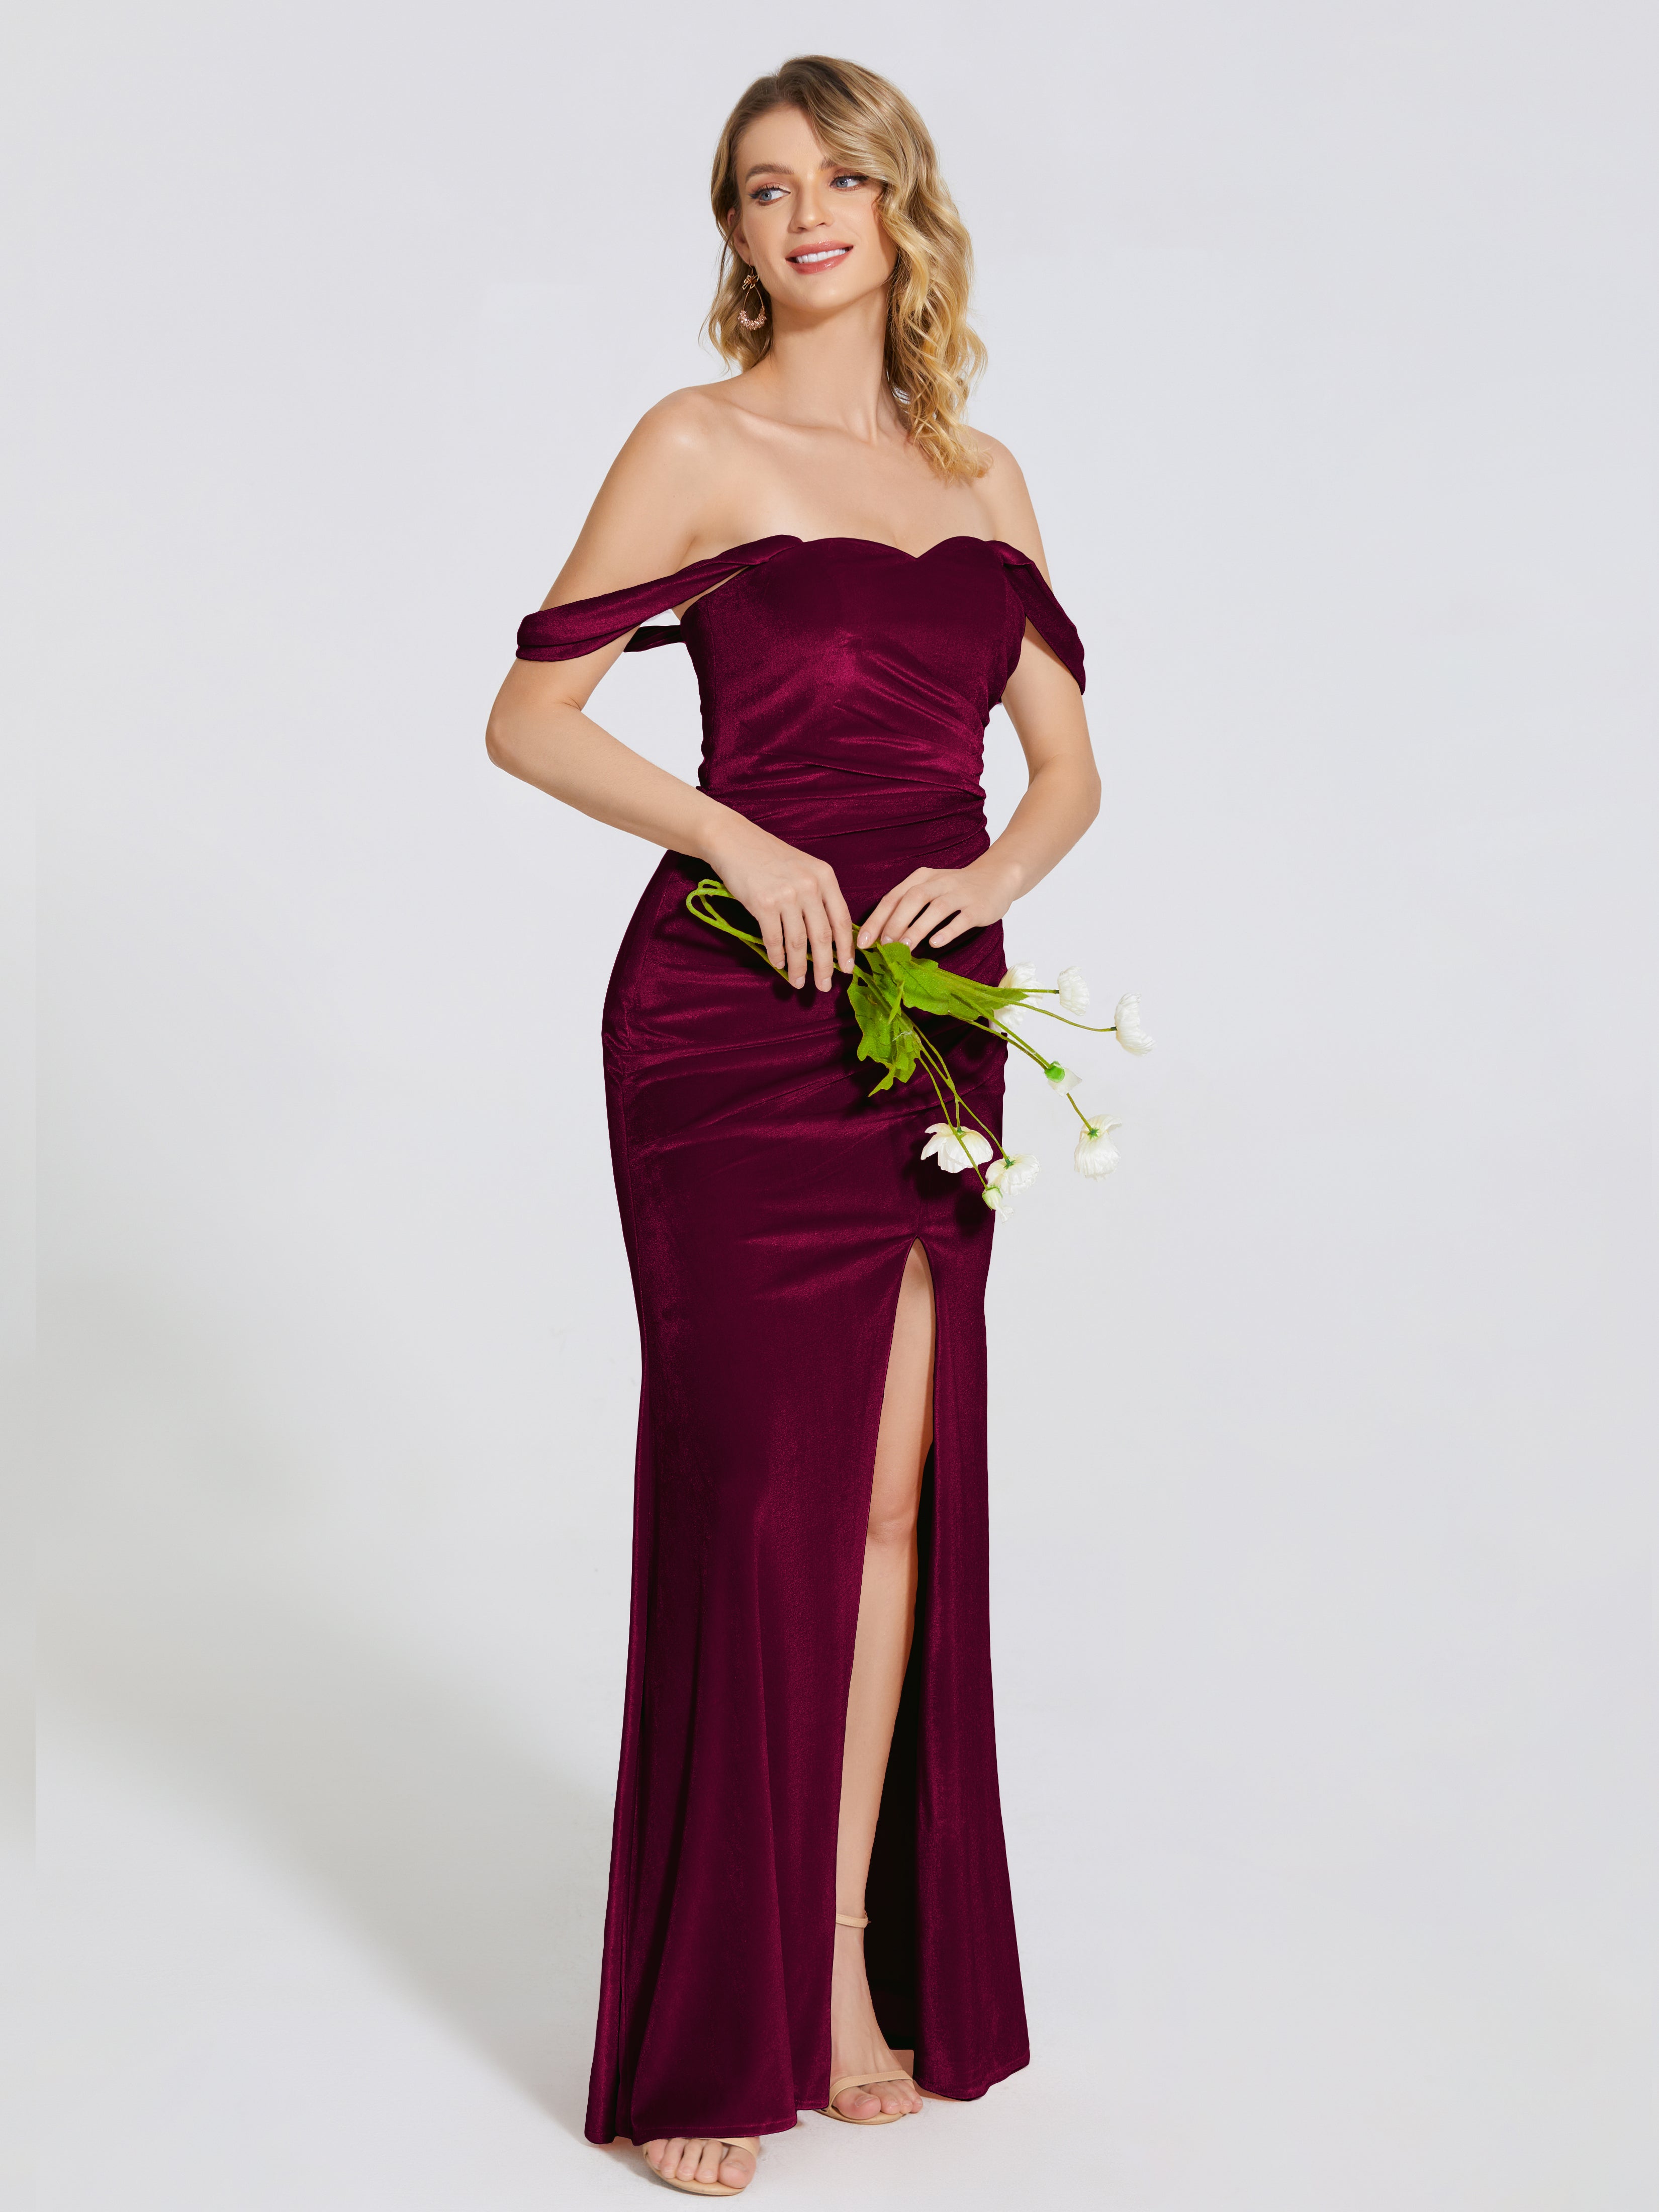 2022 Brilliant Burgundy Bridesmaid Dresses In Inexpensive Price Uk 